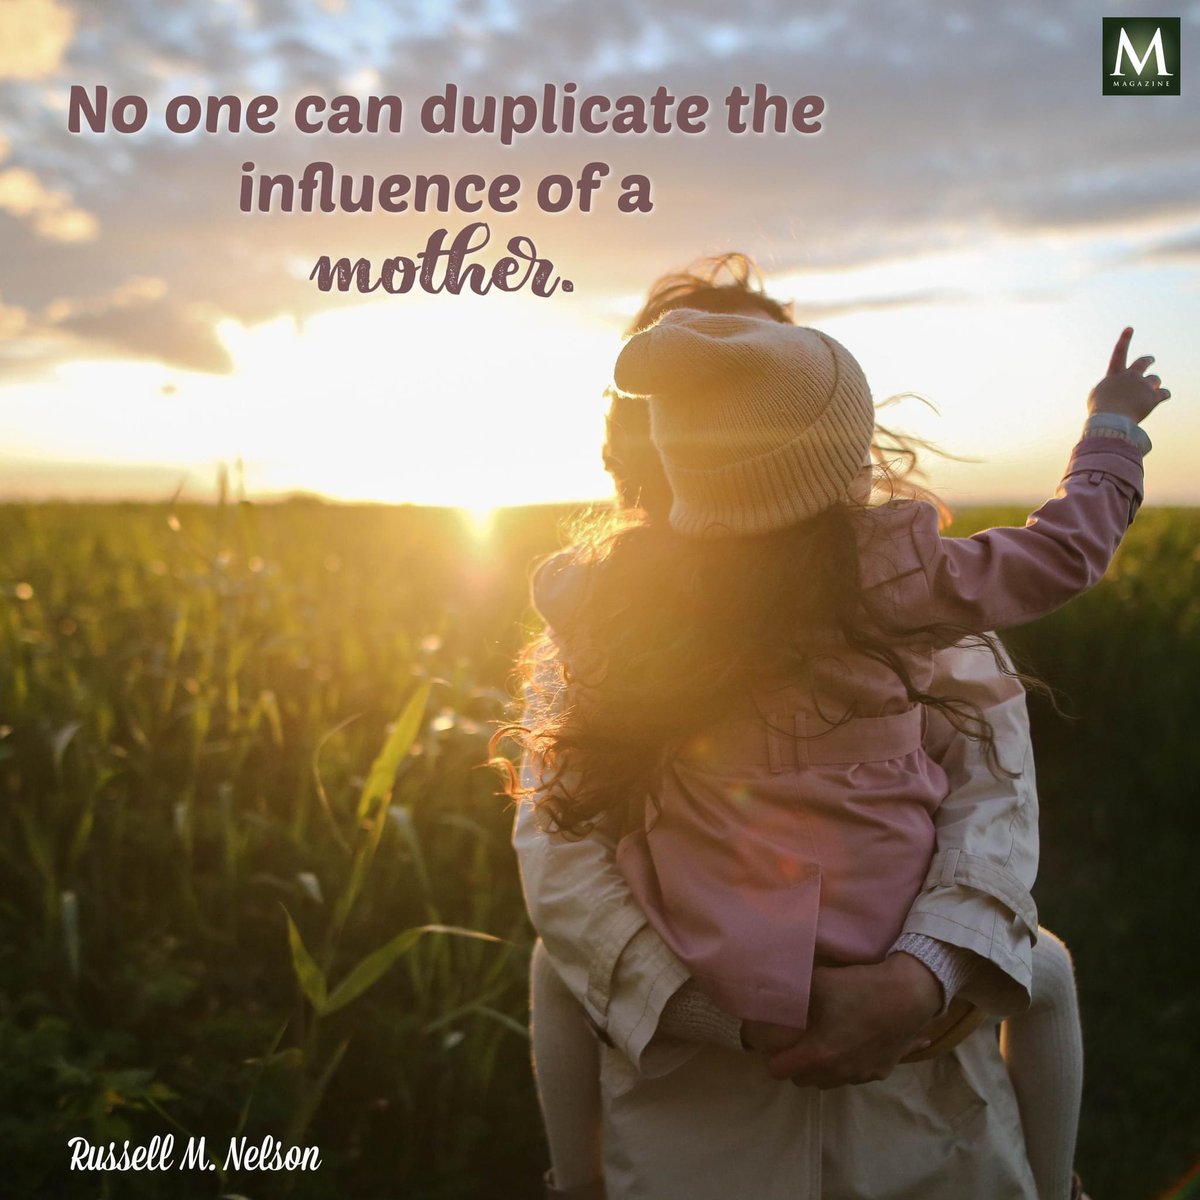 'No one can duplicate the influence of a mother.' ~ President Russell M. Nelson #Mothers #MothersDay #MomsInfluence #TrustGod #CountOnHim #WordOfGod #HearHim #ComeUntoChrist #ShareGoodness #ChildrenOfGod #GodLovesYou #TheChurchOfJesusChristOfLatterDaySaints